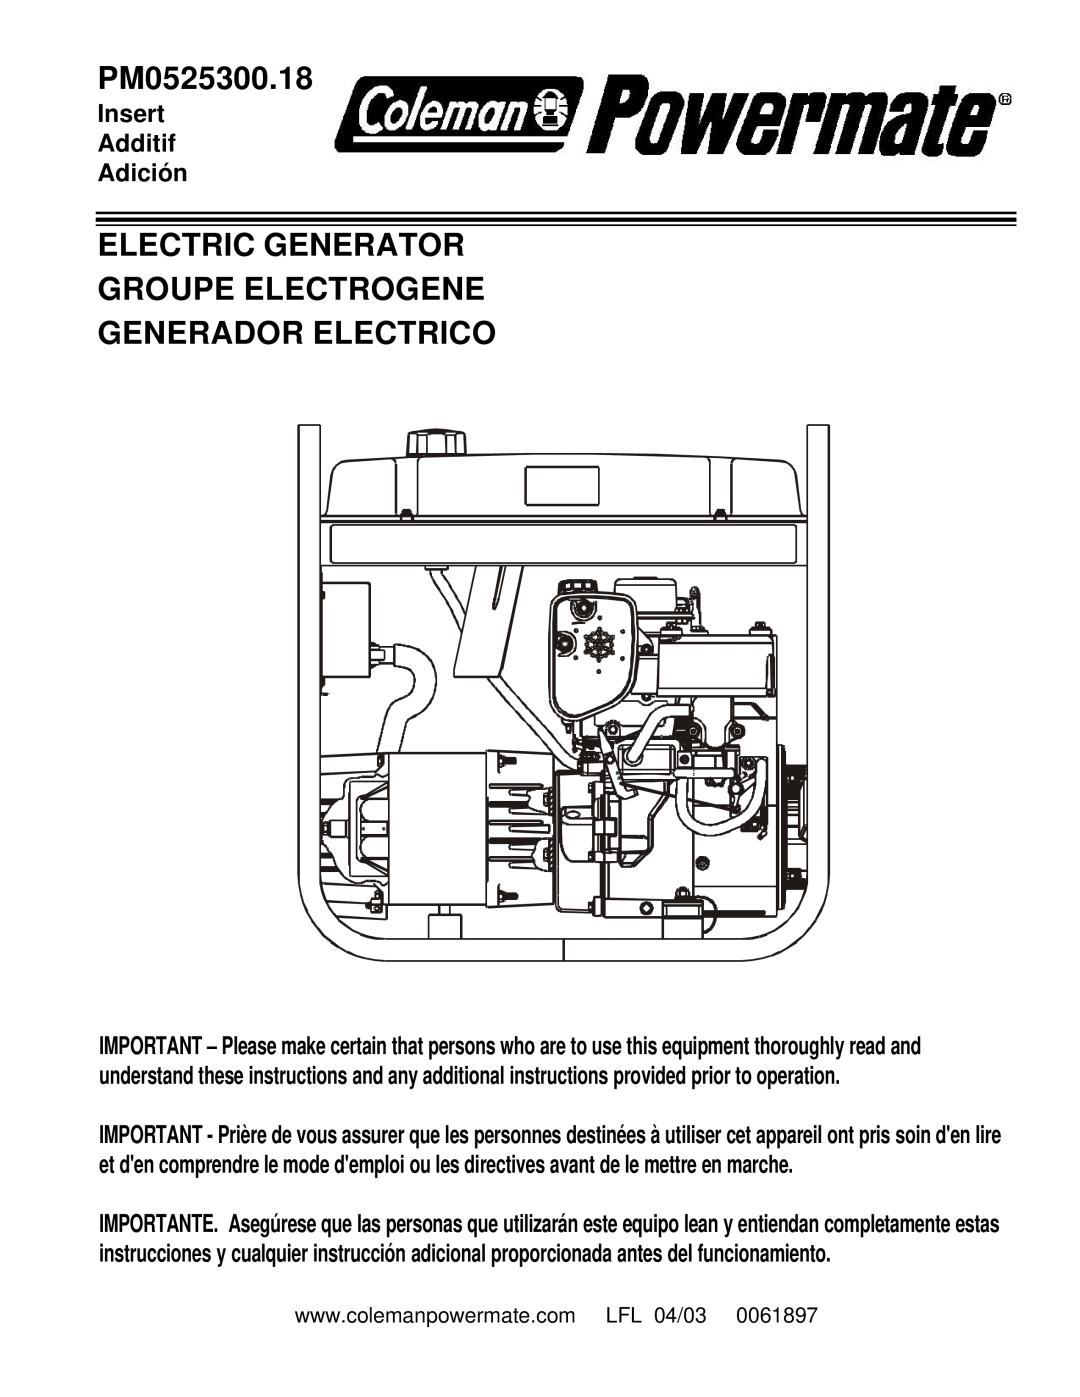 Coleman PM0525300.18 manual Electric Generator Groupe Electrogene, Generador Electrico, Insert Additif Adición 